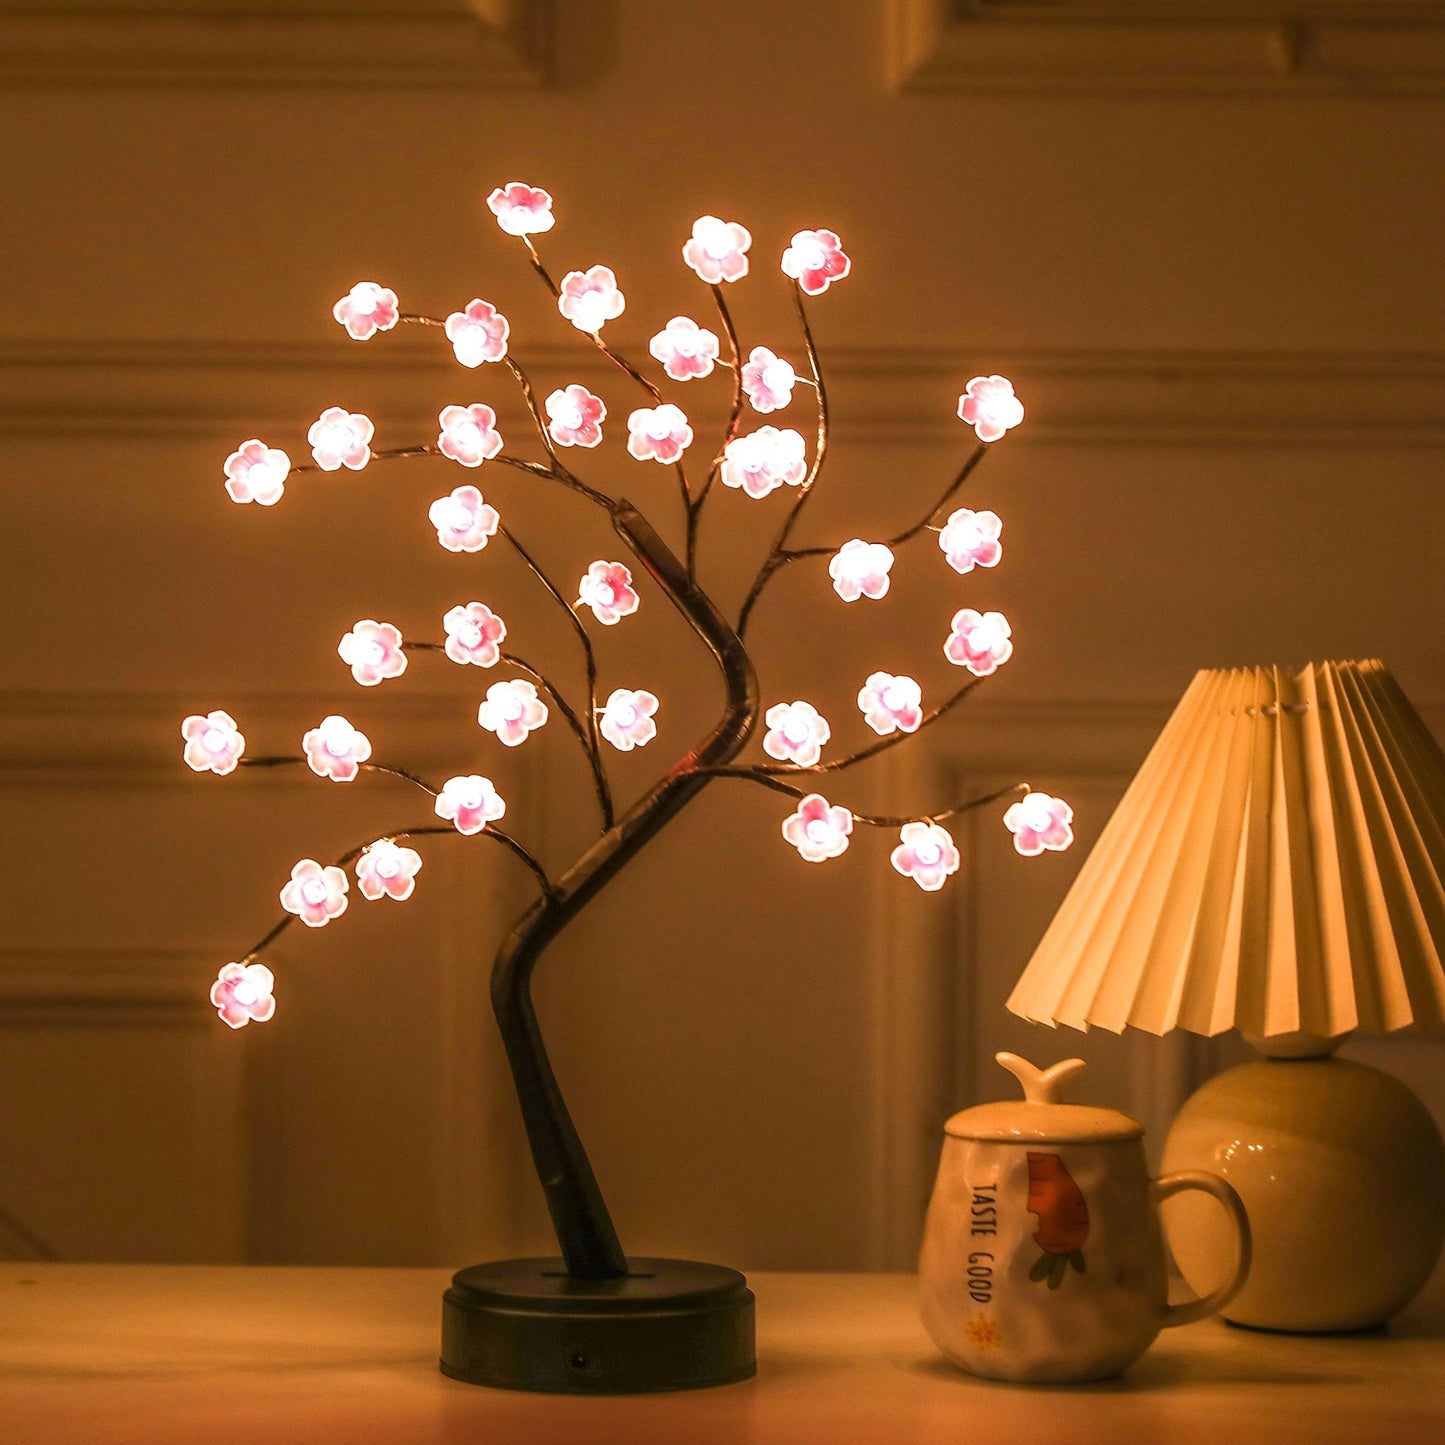 Cherry blossom bonsai tree lights - decorative lights fairy tree lights USB or AA battery powered DIY